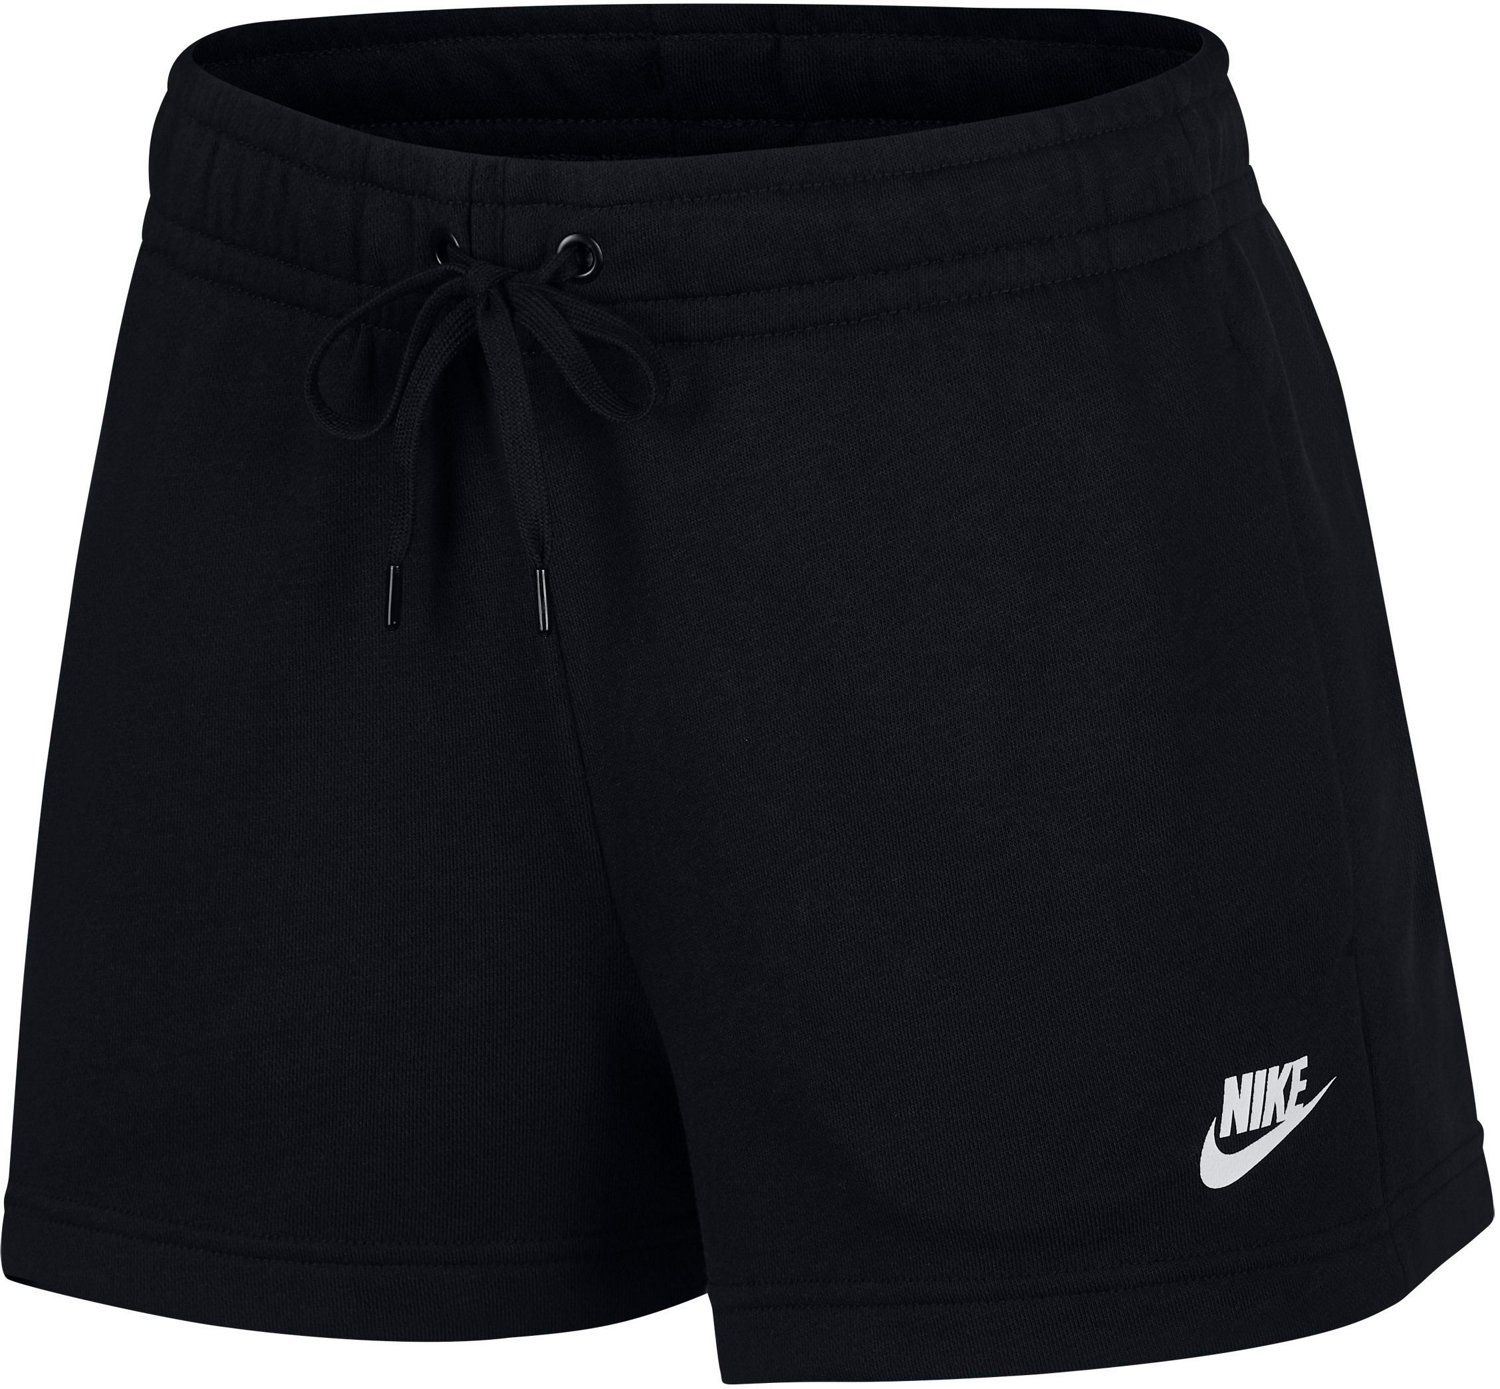 26 30 Minute Nike club fleece workout shorts for Women